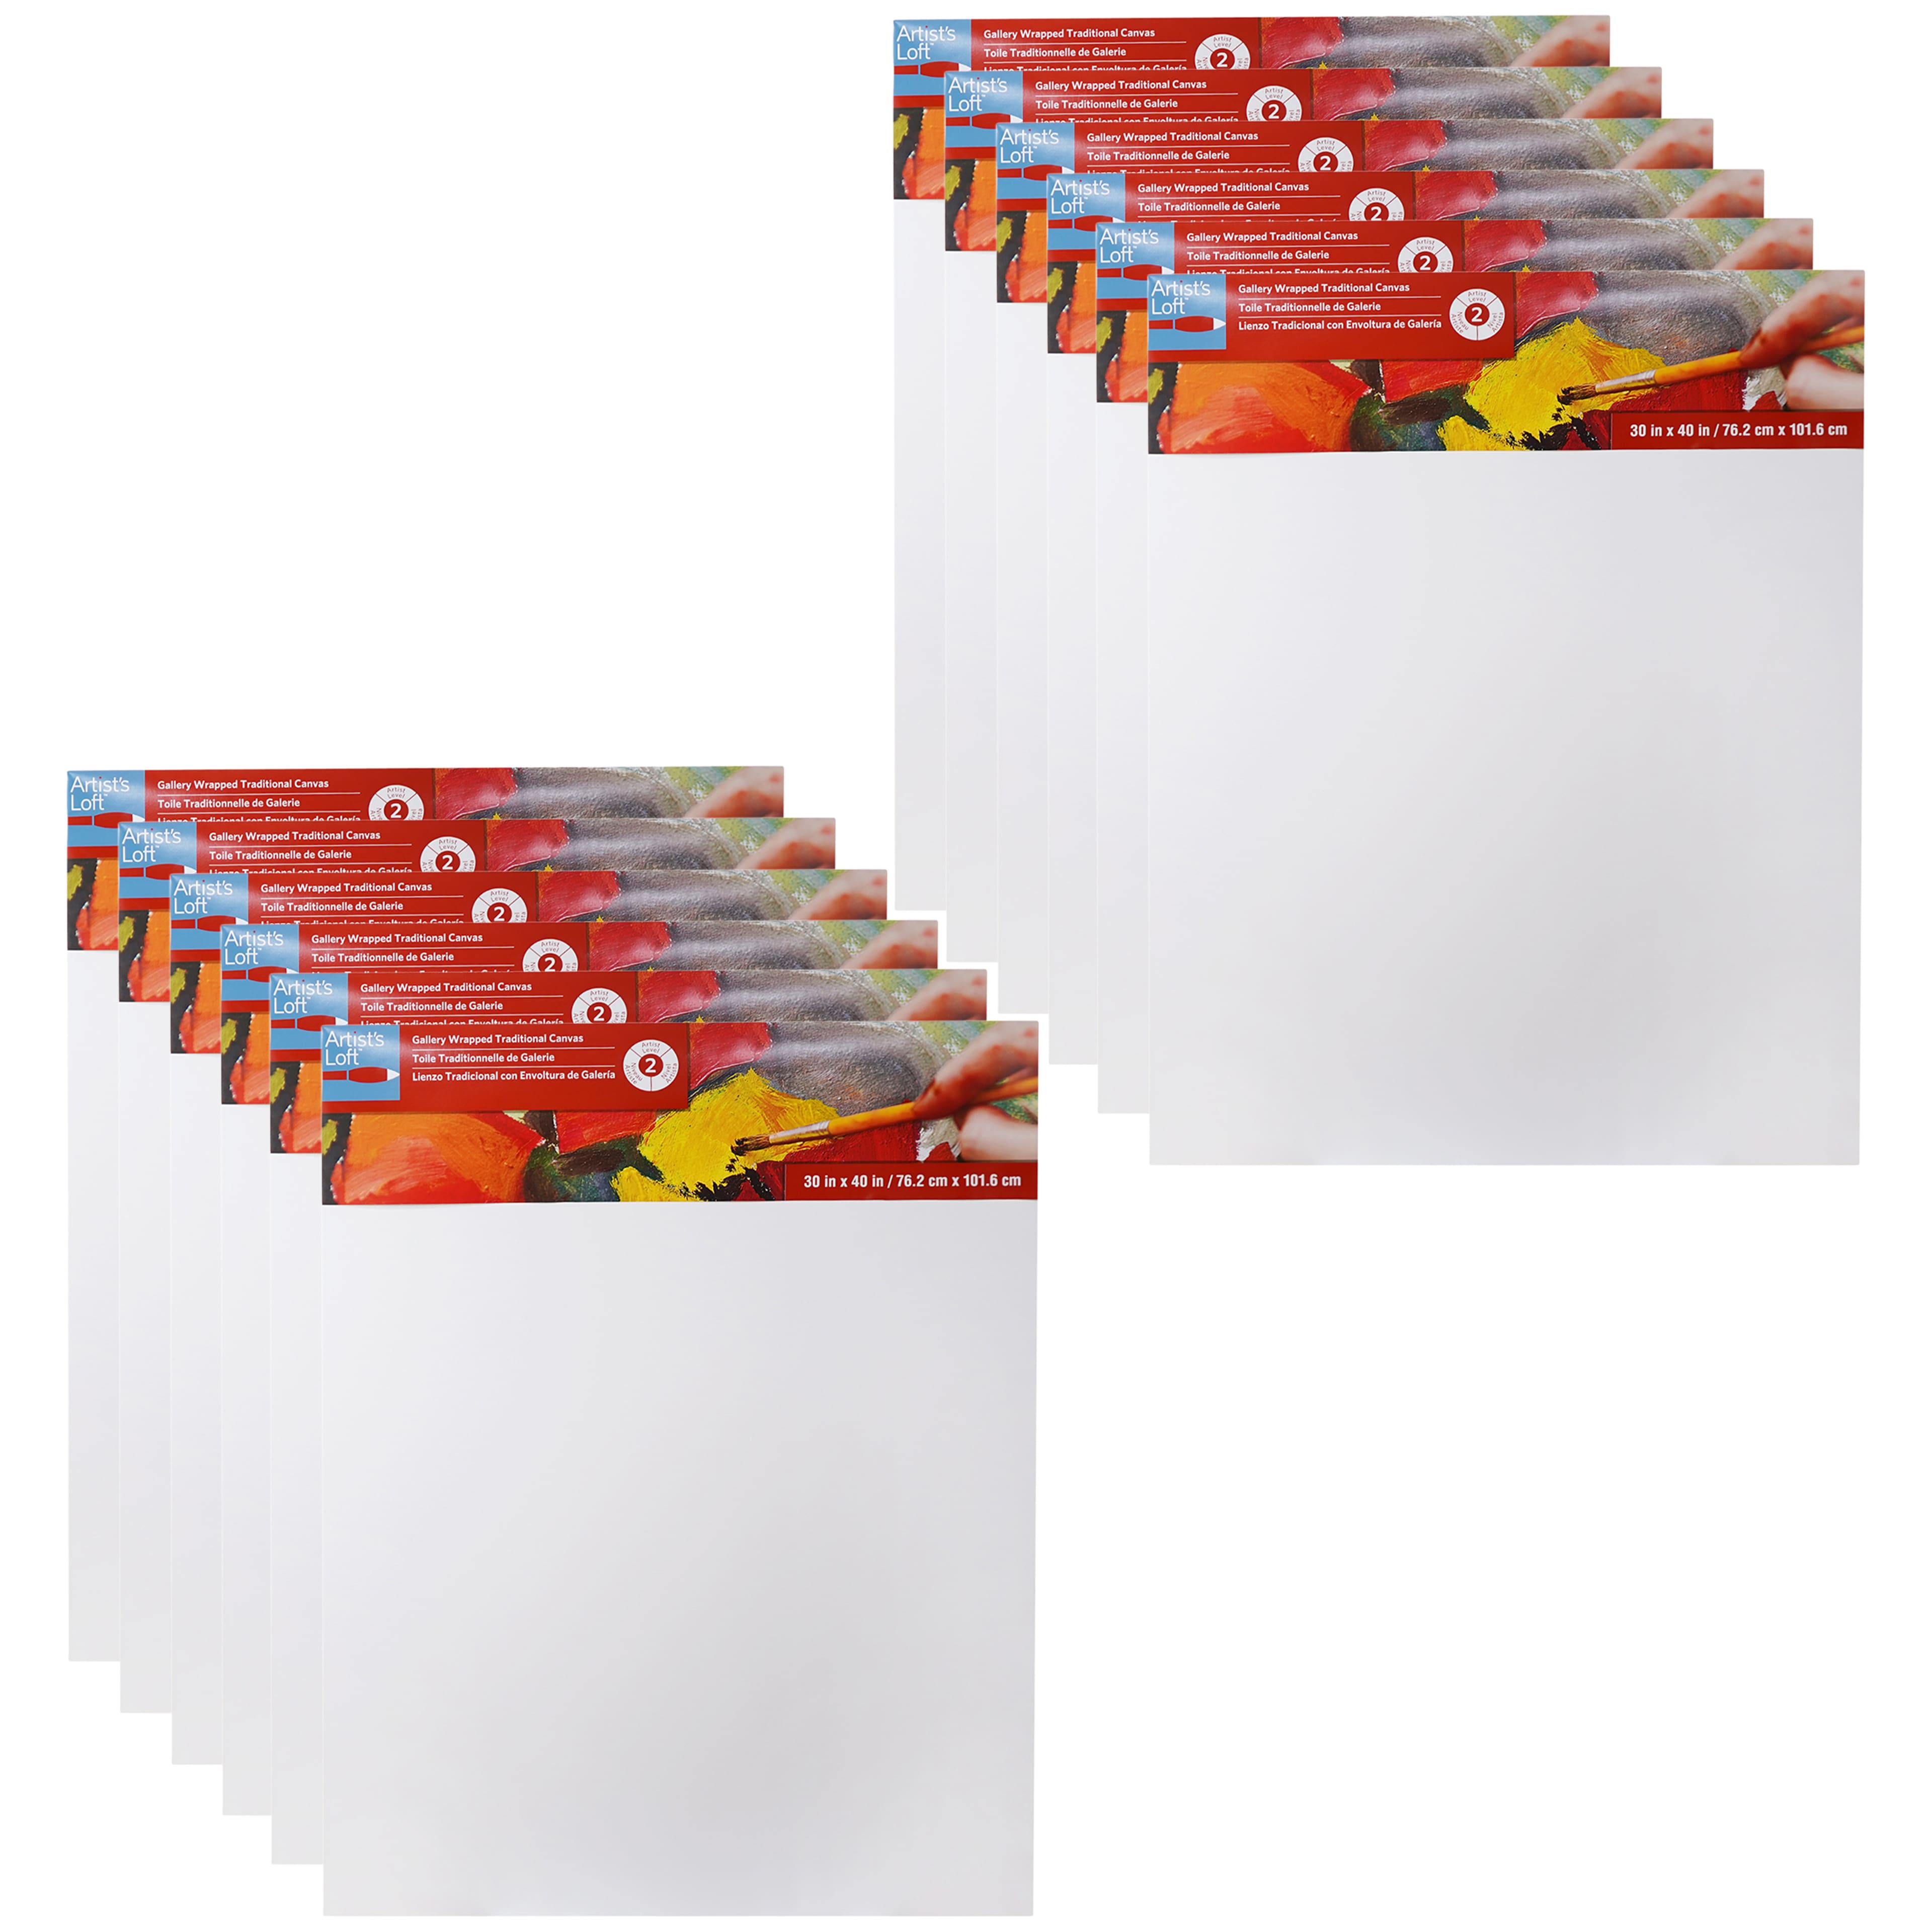 Bulk 6 Boxes of Classic Fabric Markers - 8 Colors Per Box